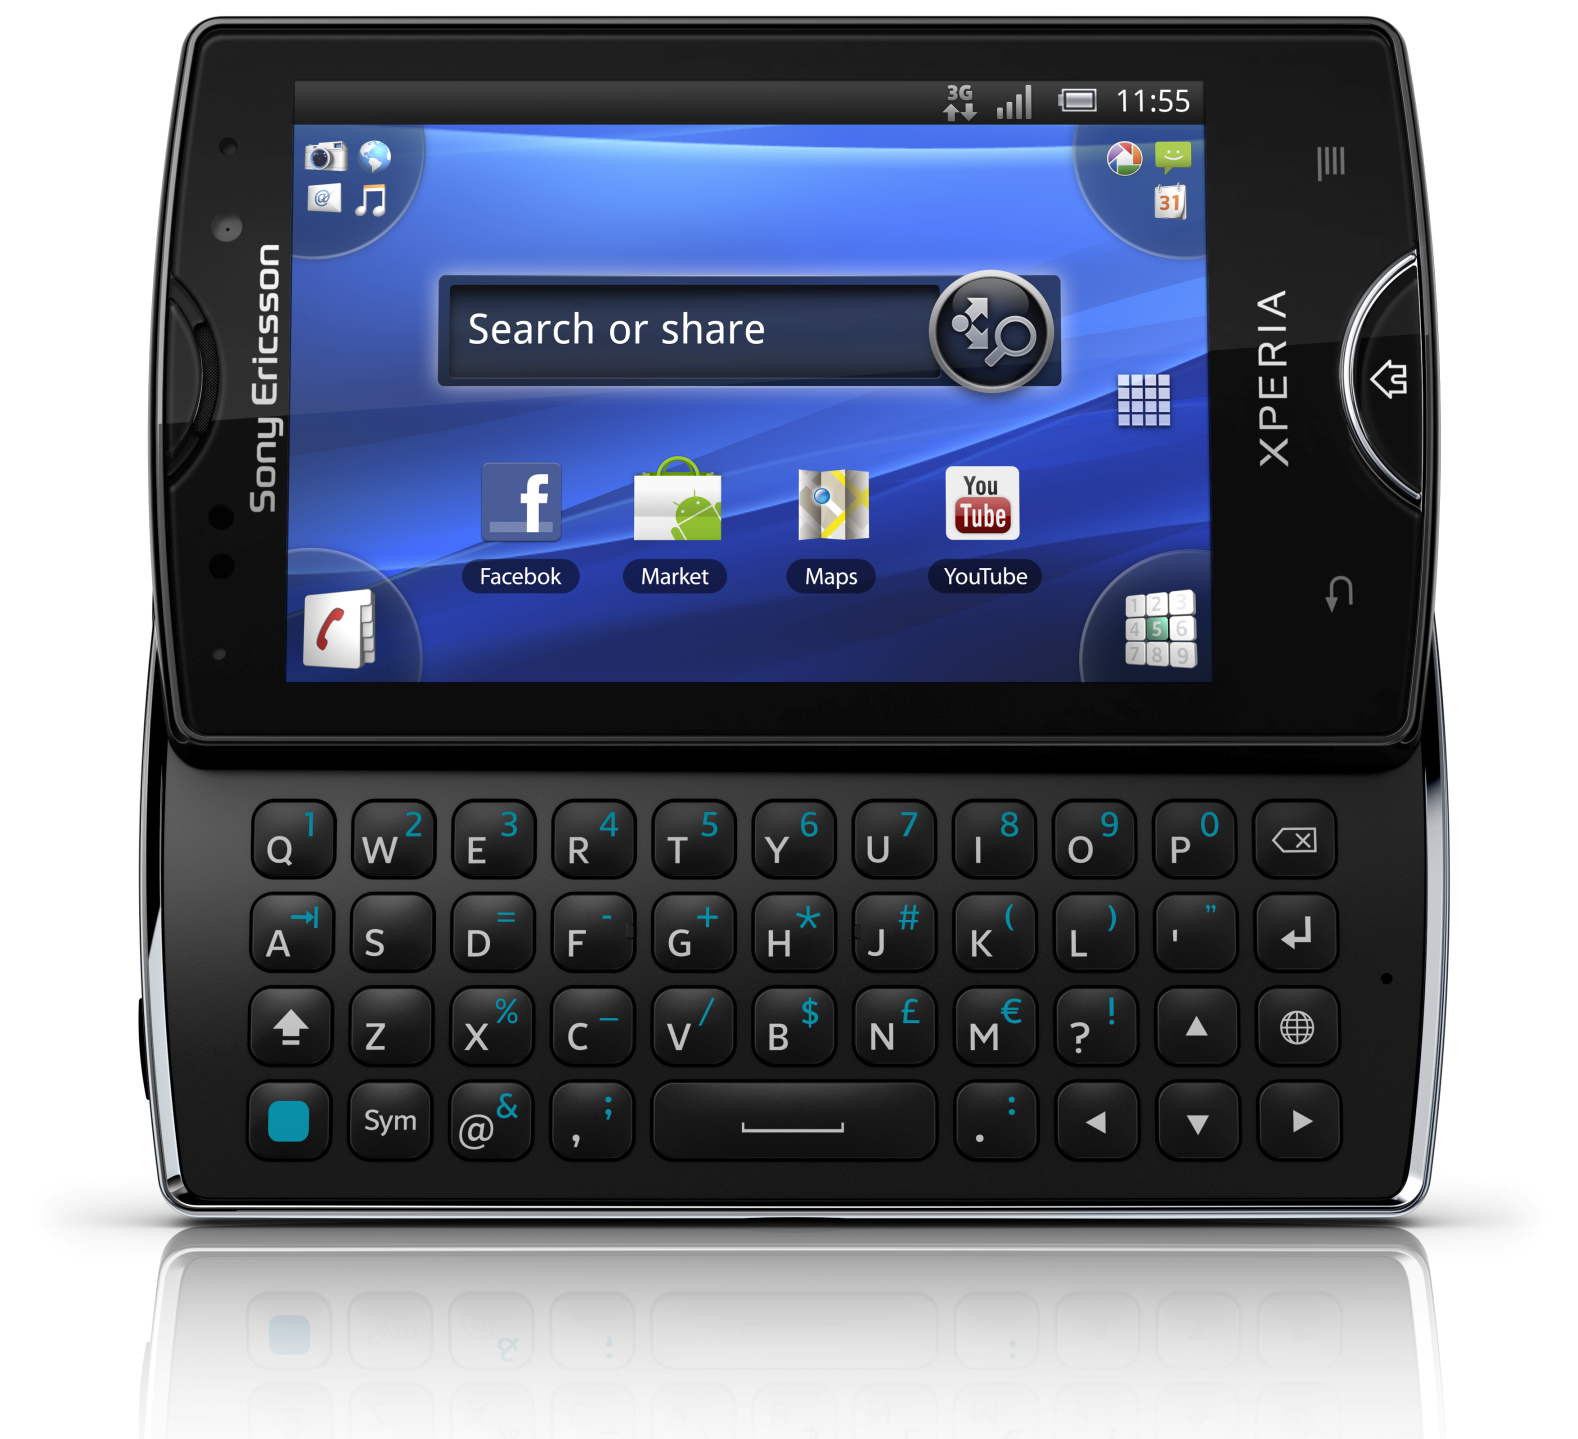 Sony xperia mini. Sony Ericsson Xperia sk17i. Sony Ericsson sk17i Xperia Mini Pro. Xperia Mini Pro sk17i. Sony Ericsson sk17 Xperia Mini Pro.